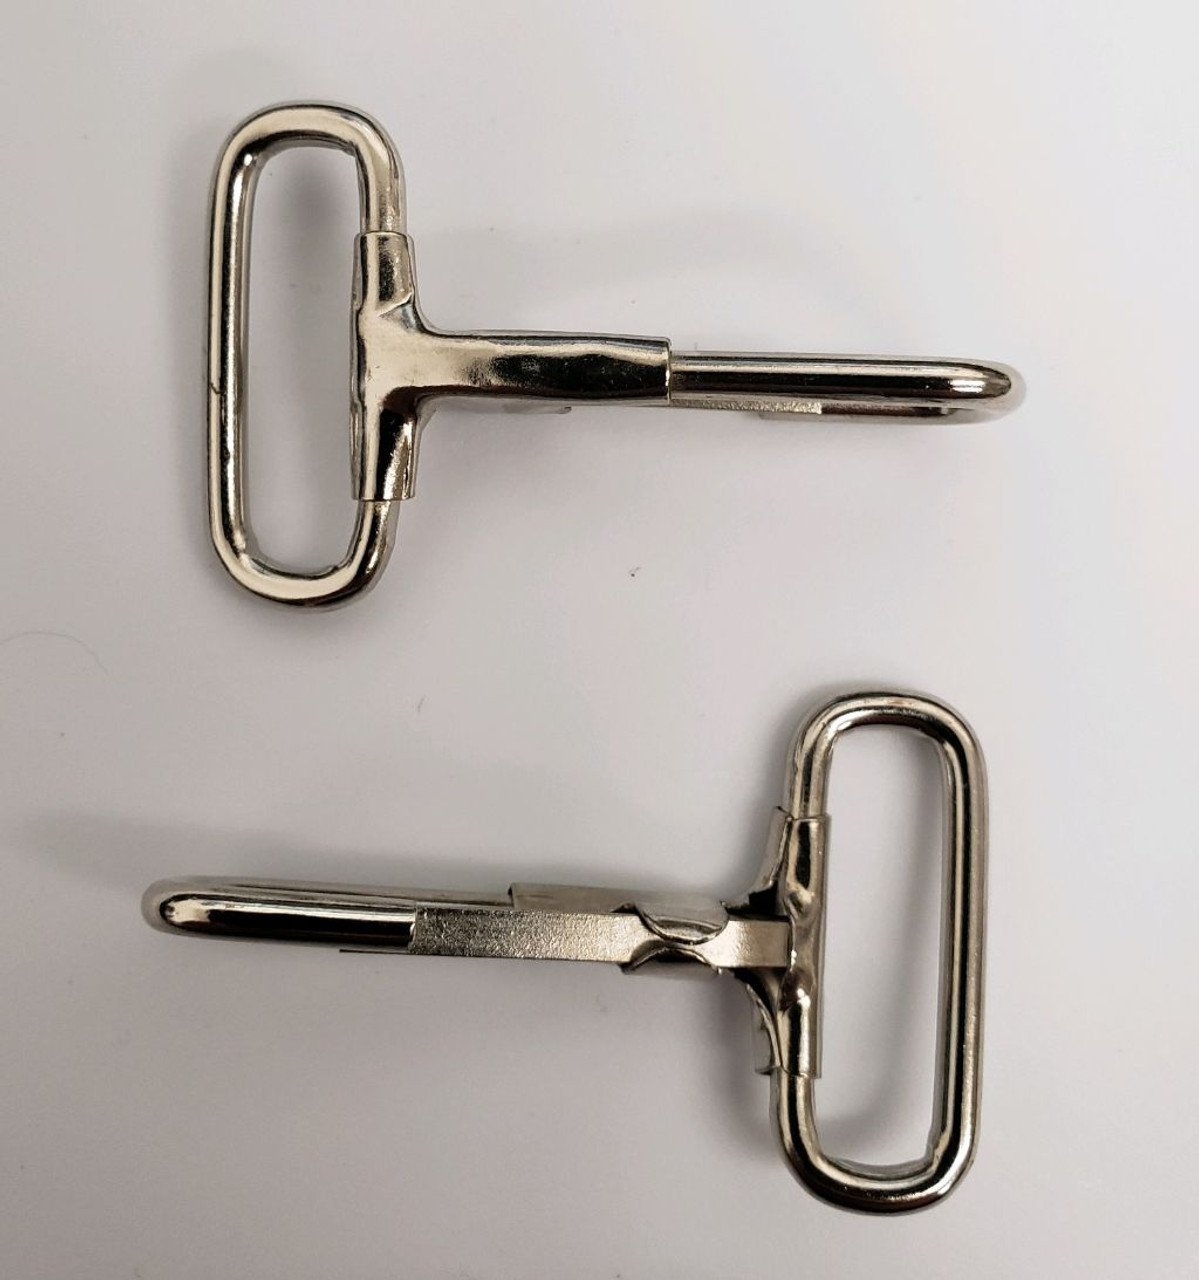 2 Pack of Chrome Plated Brass Bimini Top Spring Snap Hooks for